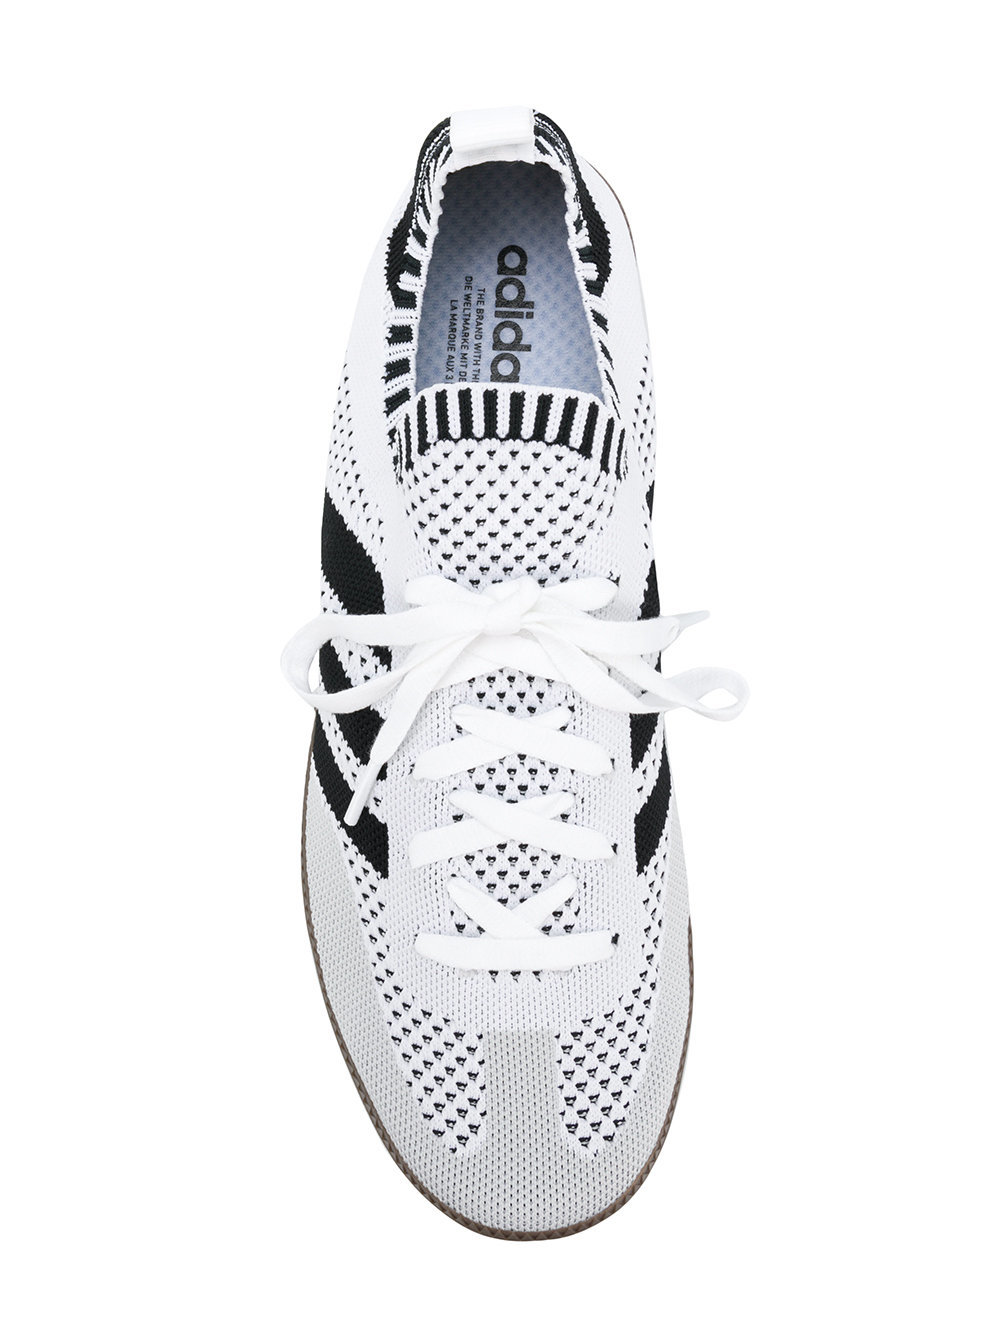 adidas Samba Sock Primeknit Sneakers, $73 | | Lookastic